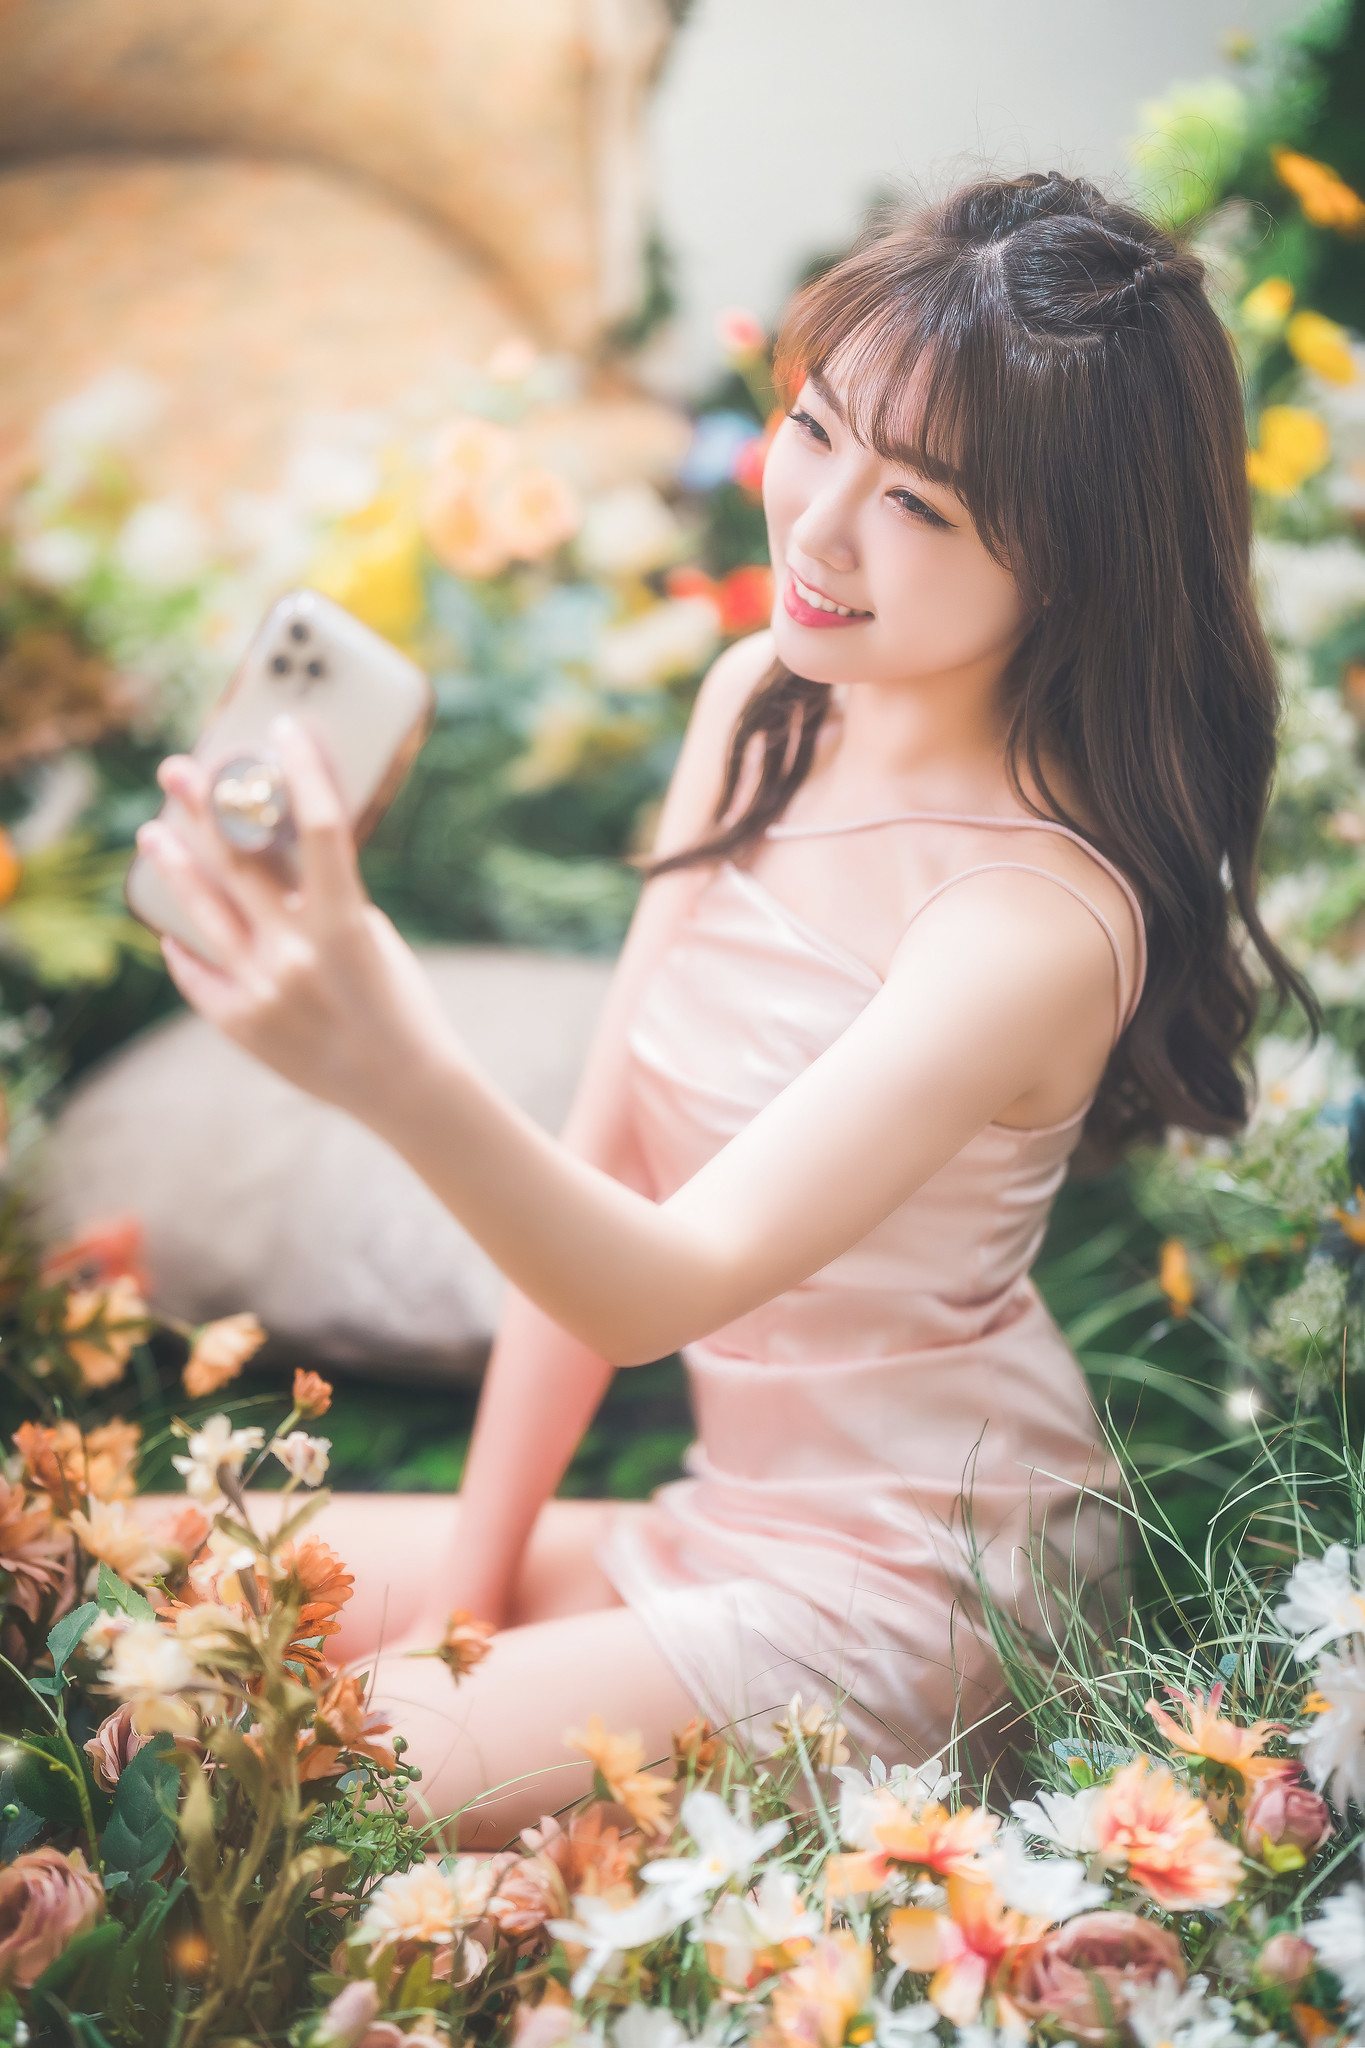 Asian Women Model Smartphone Selfies Flowers Sitting Plants Smiling Pink Dress Long Hair Red Lipstic 1365x2048